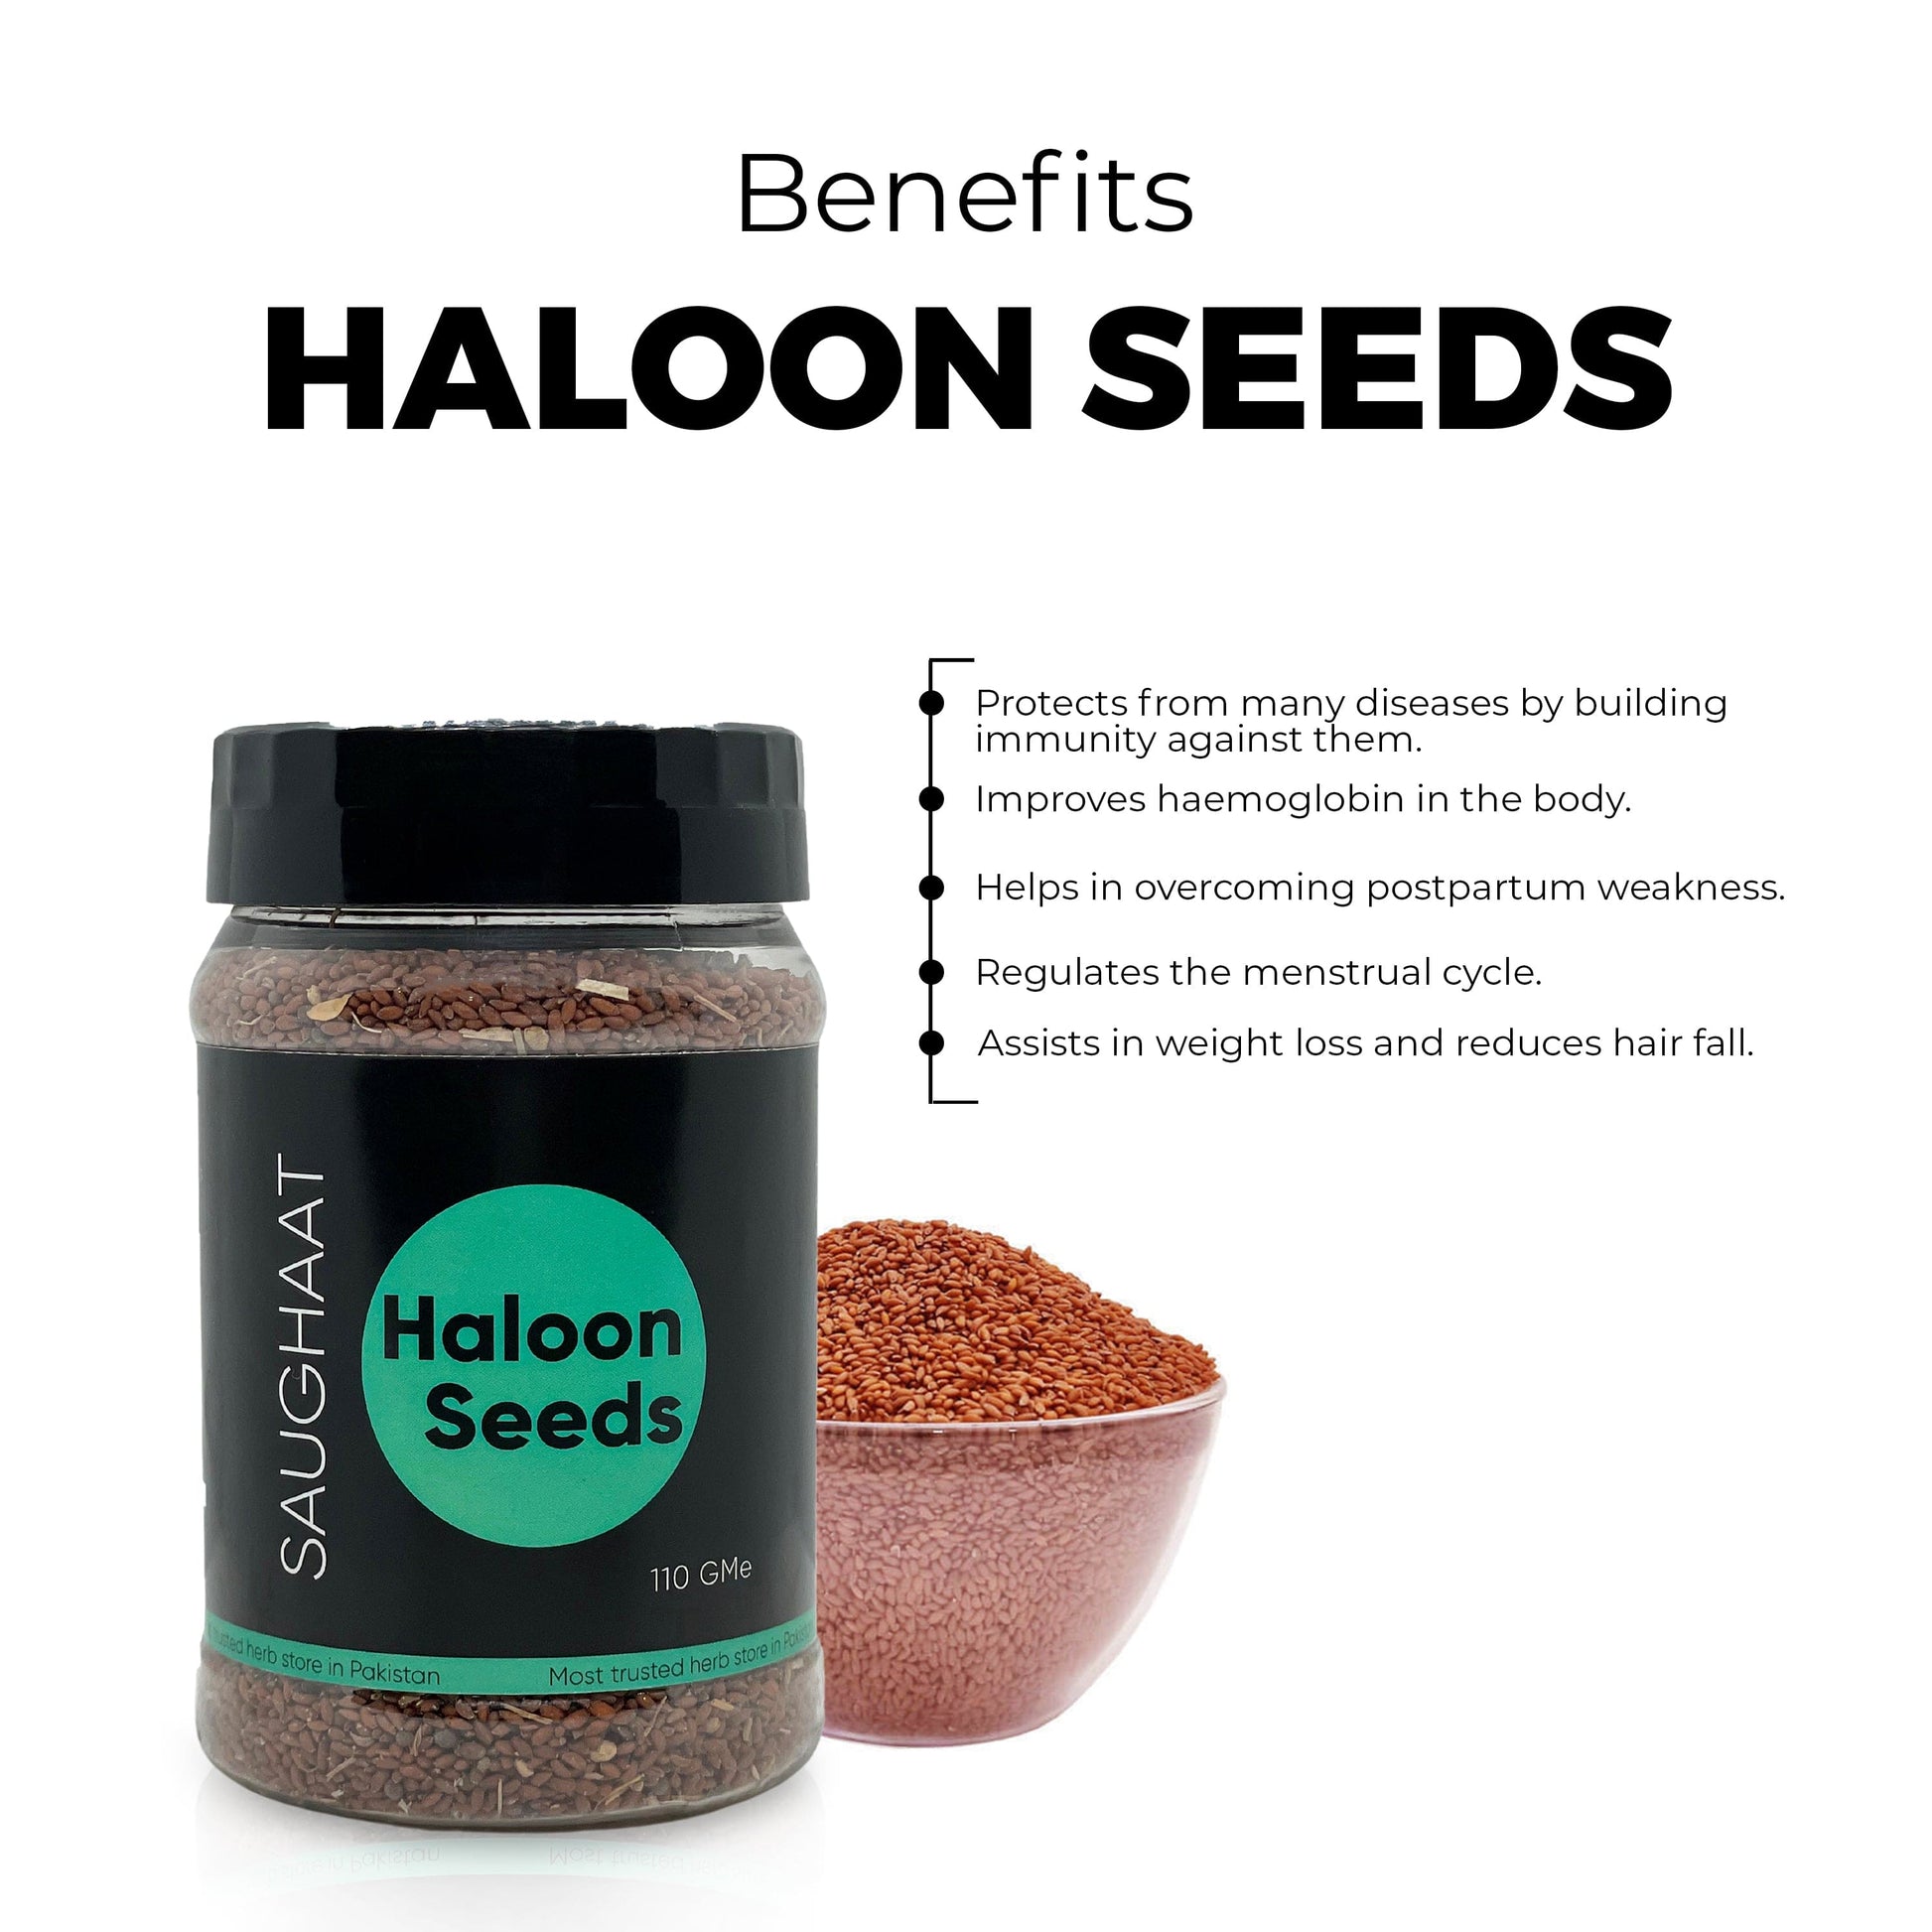 Benefits of Haloon Seeds